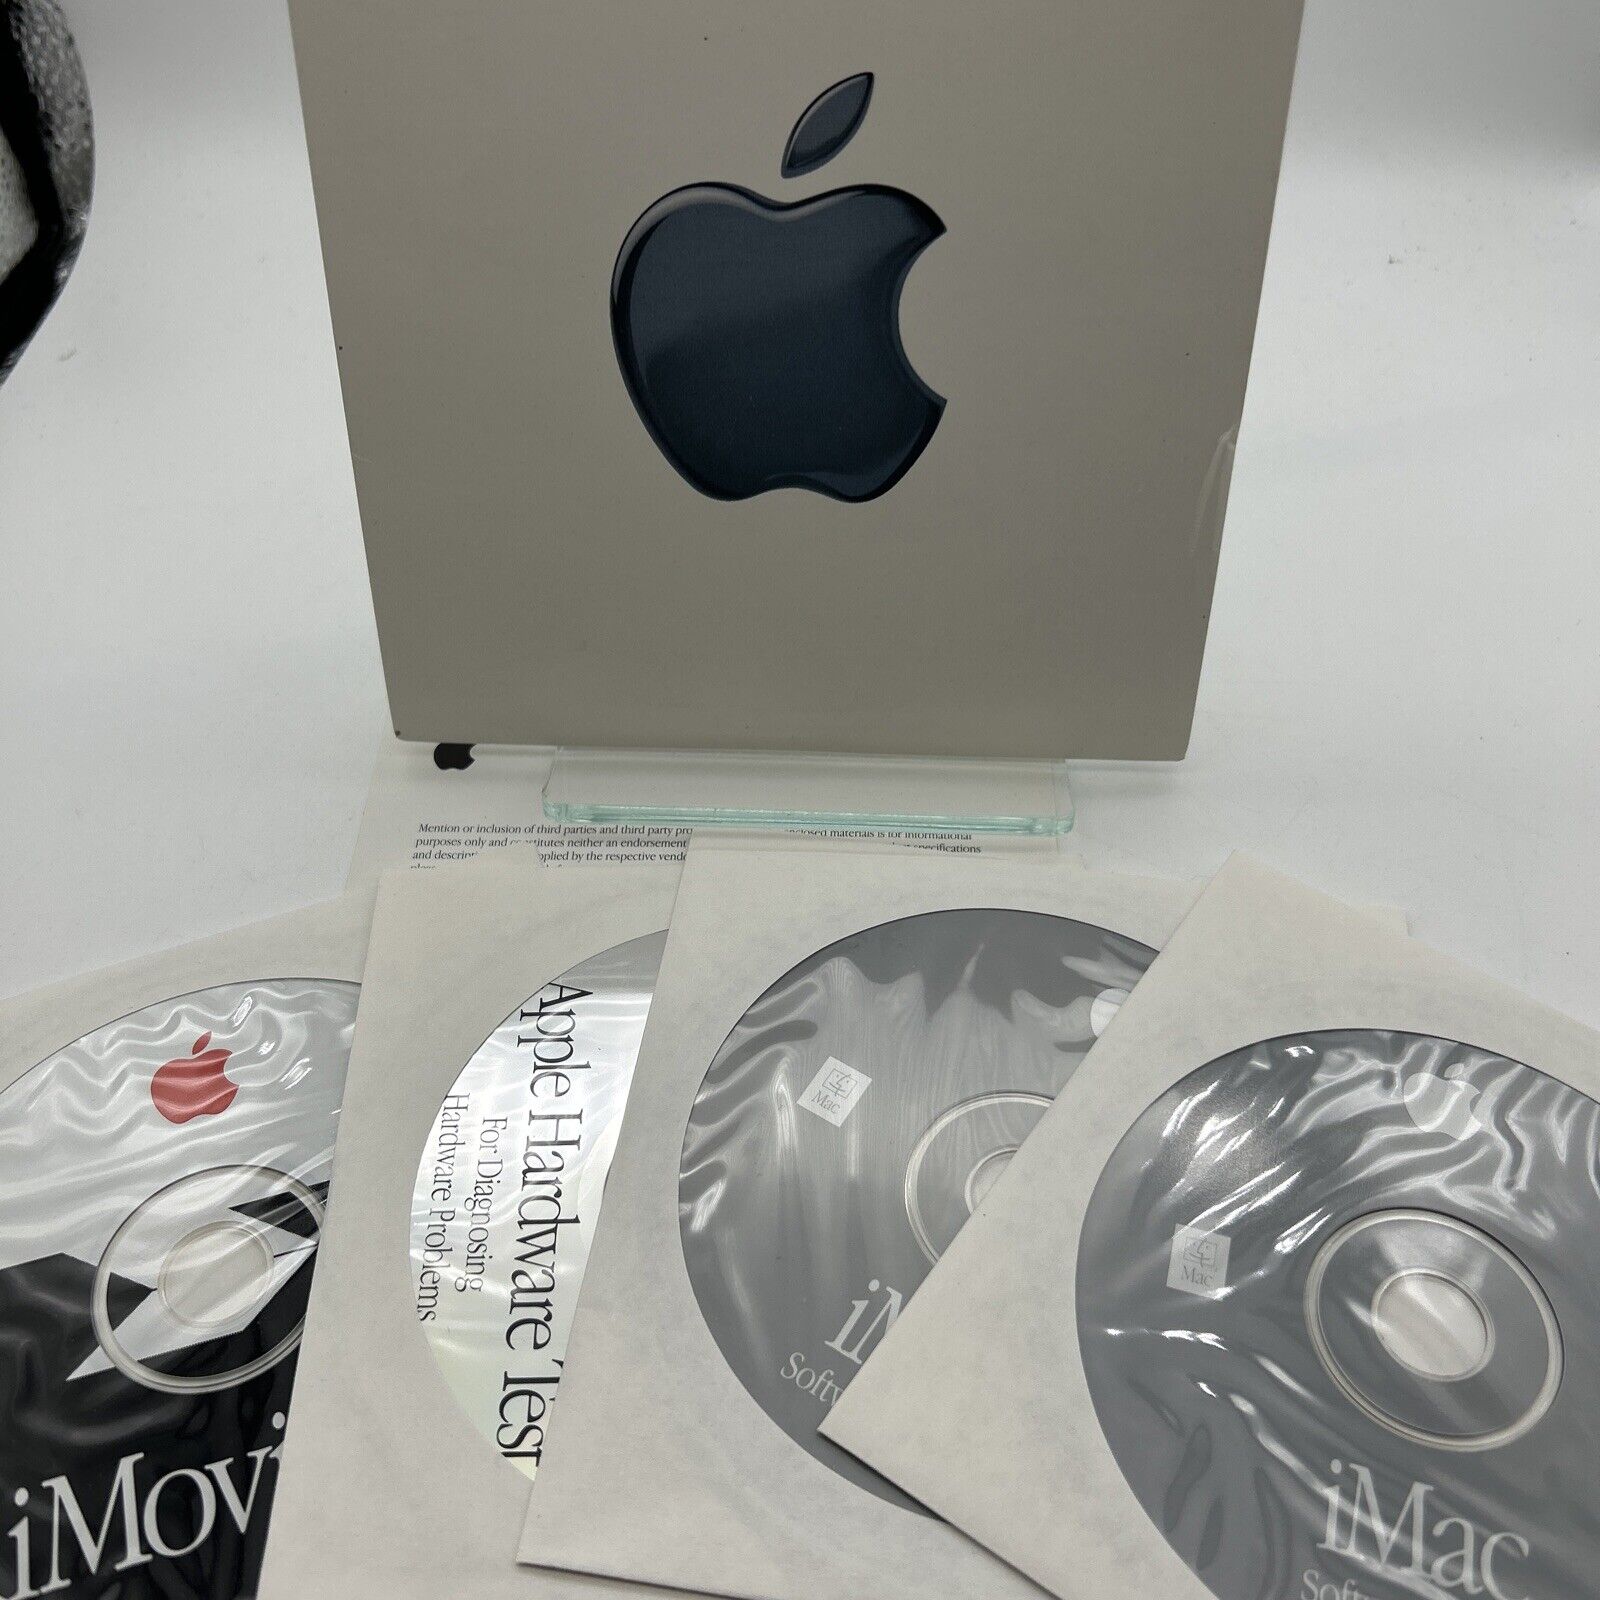 NEW Original Apple iMac DV Macintosh Mac 9.0.4 Software Restore Disc Bundle 7829